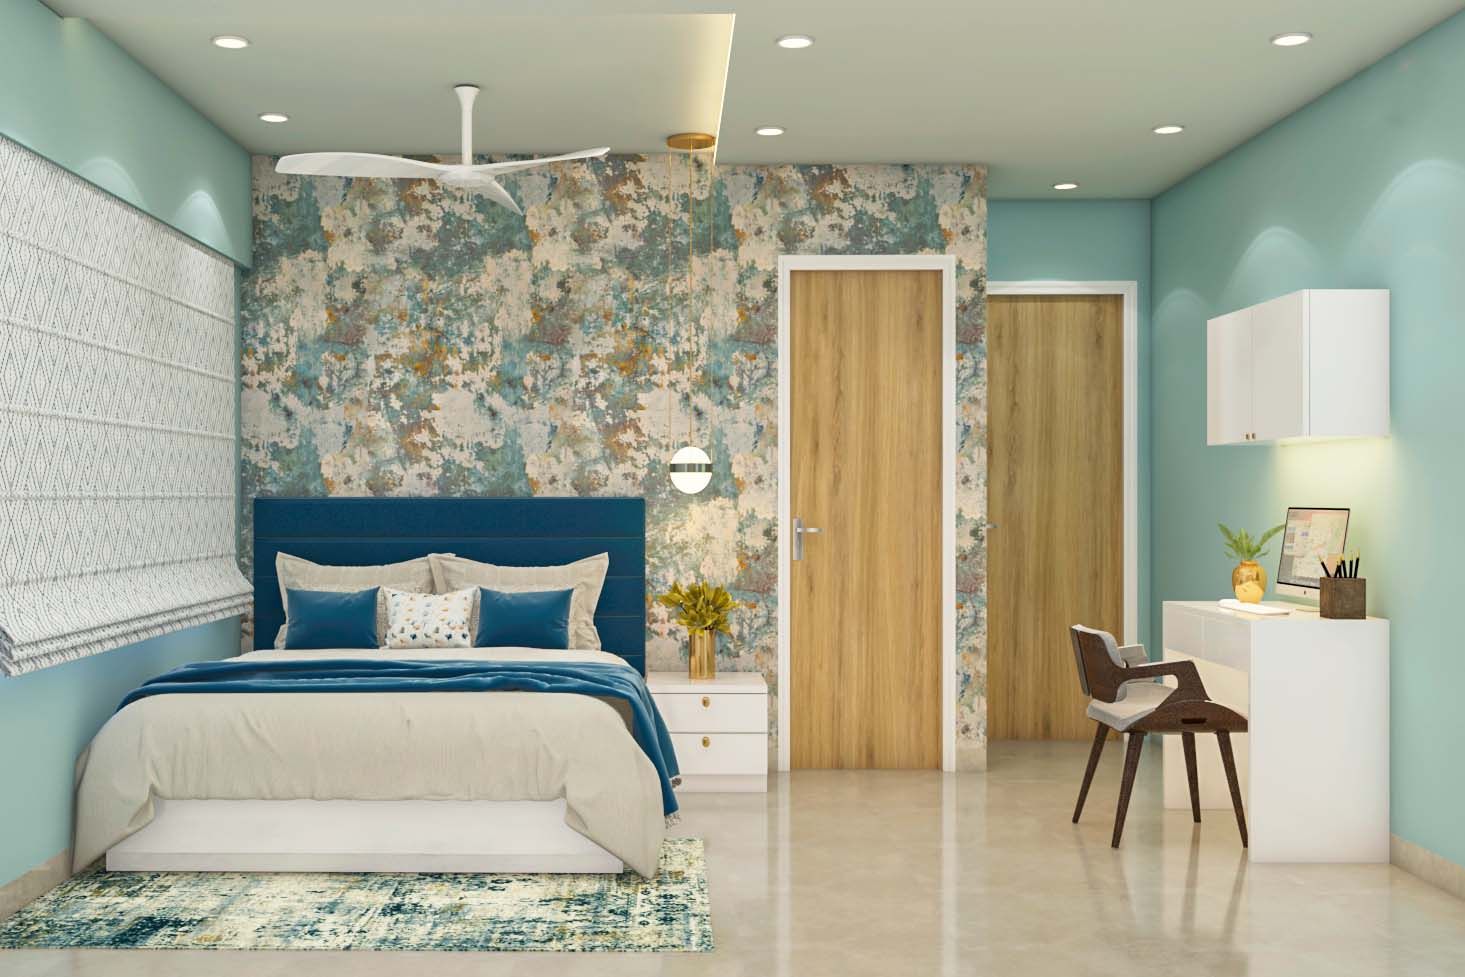 Contemporary Kid's Bedroom Design With Rustic Wallpaper